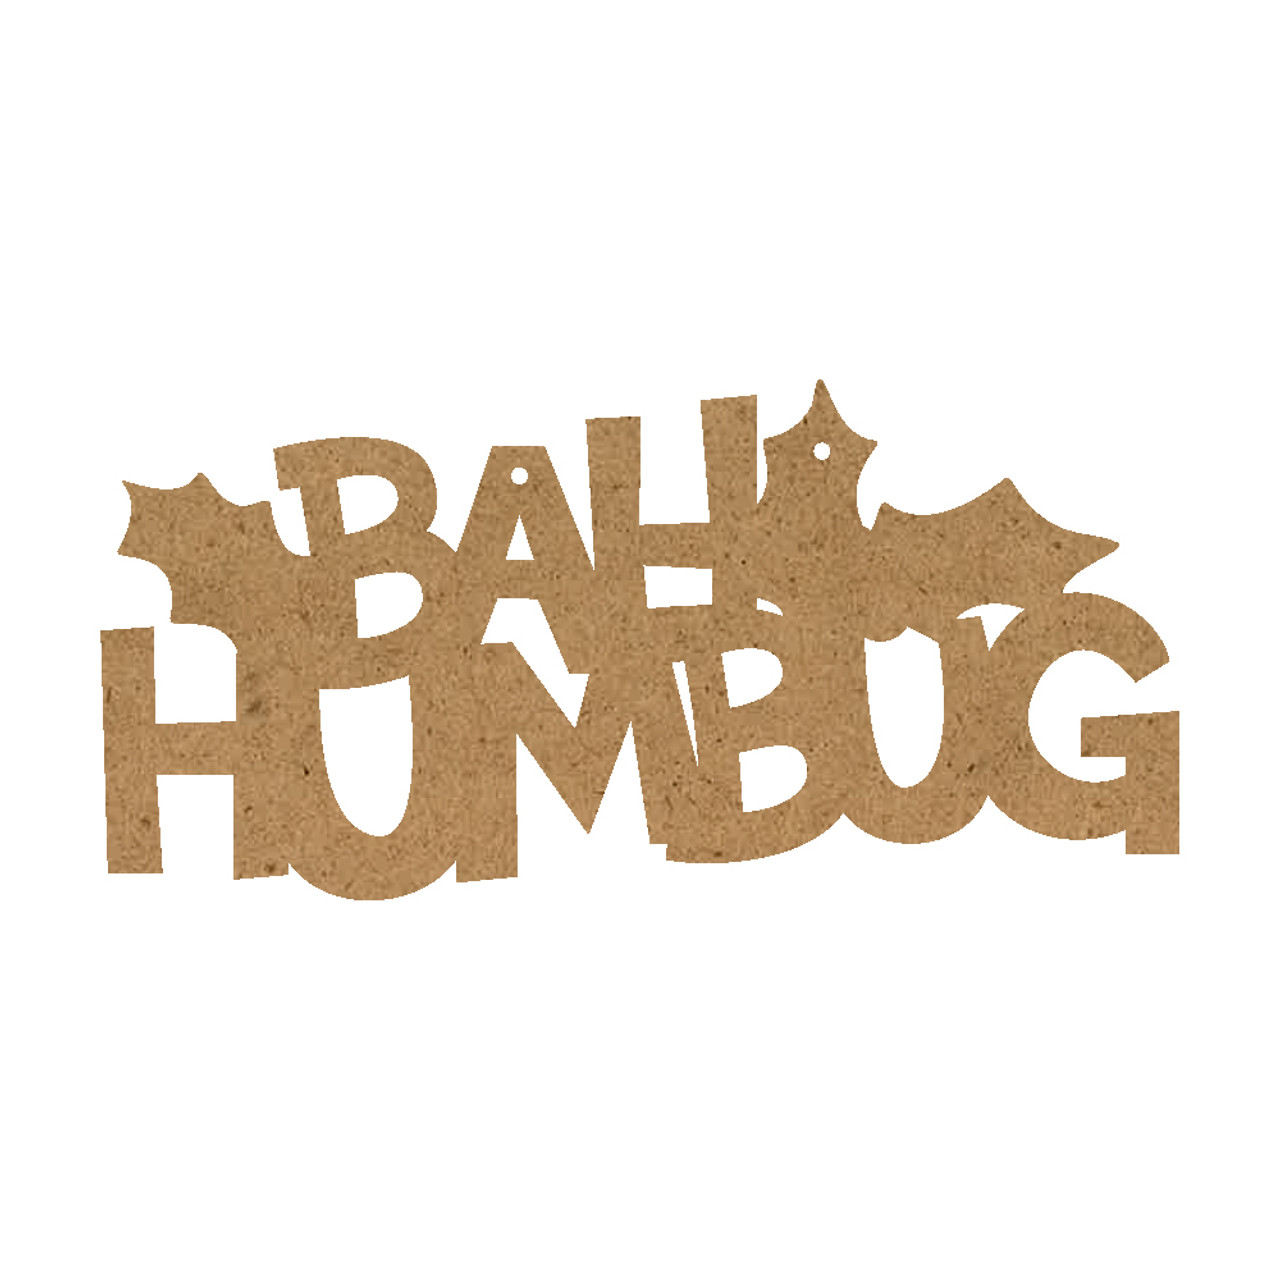 Christmas Word Ornament - Bah Humbug With Holly